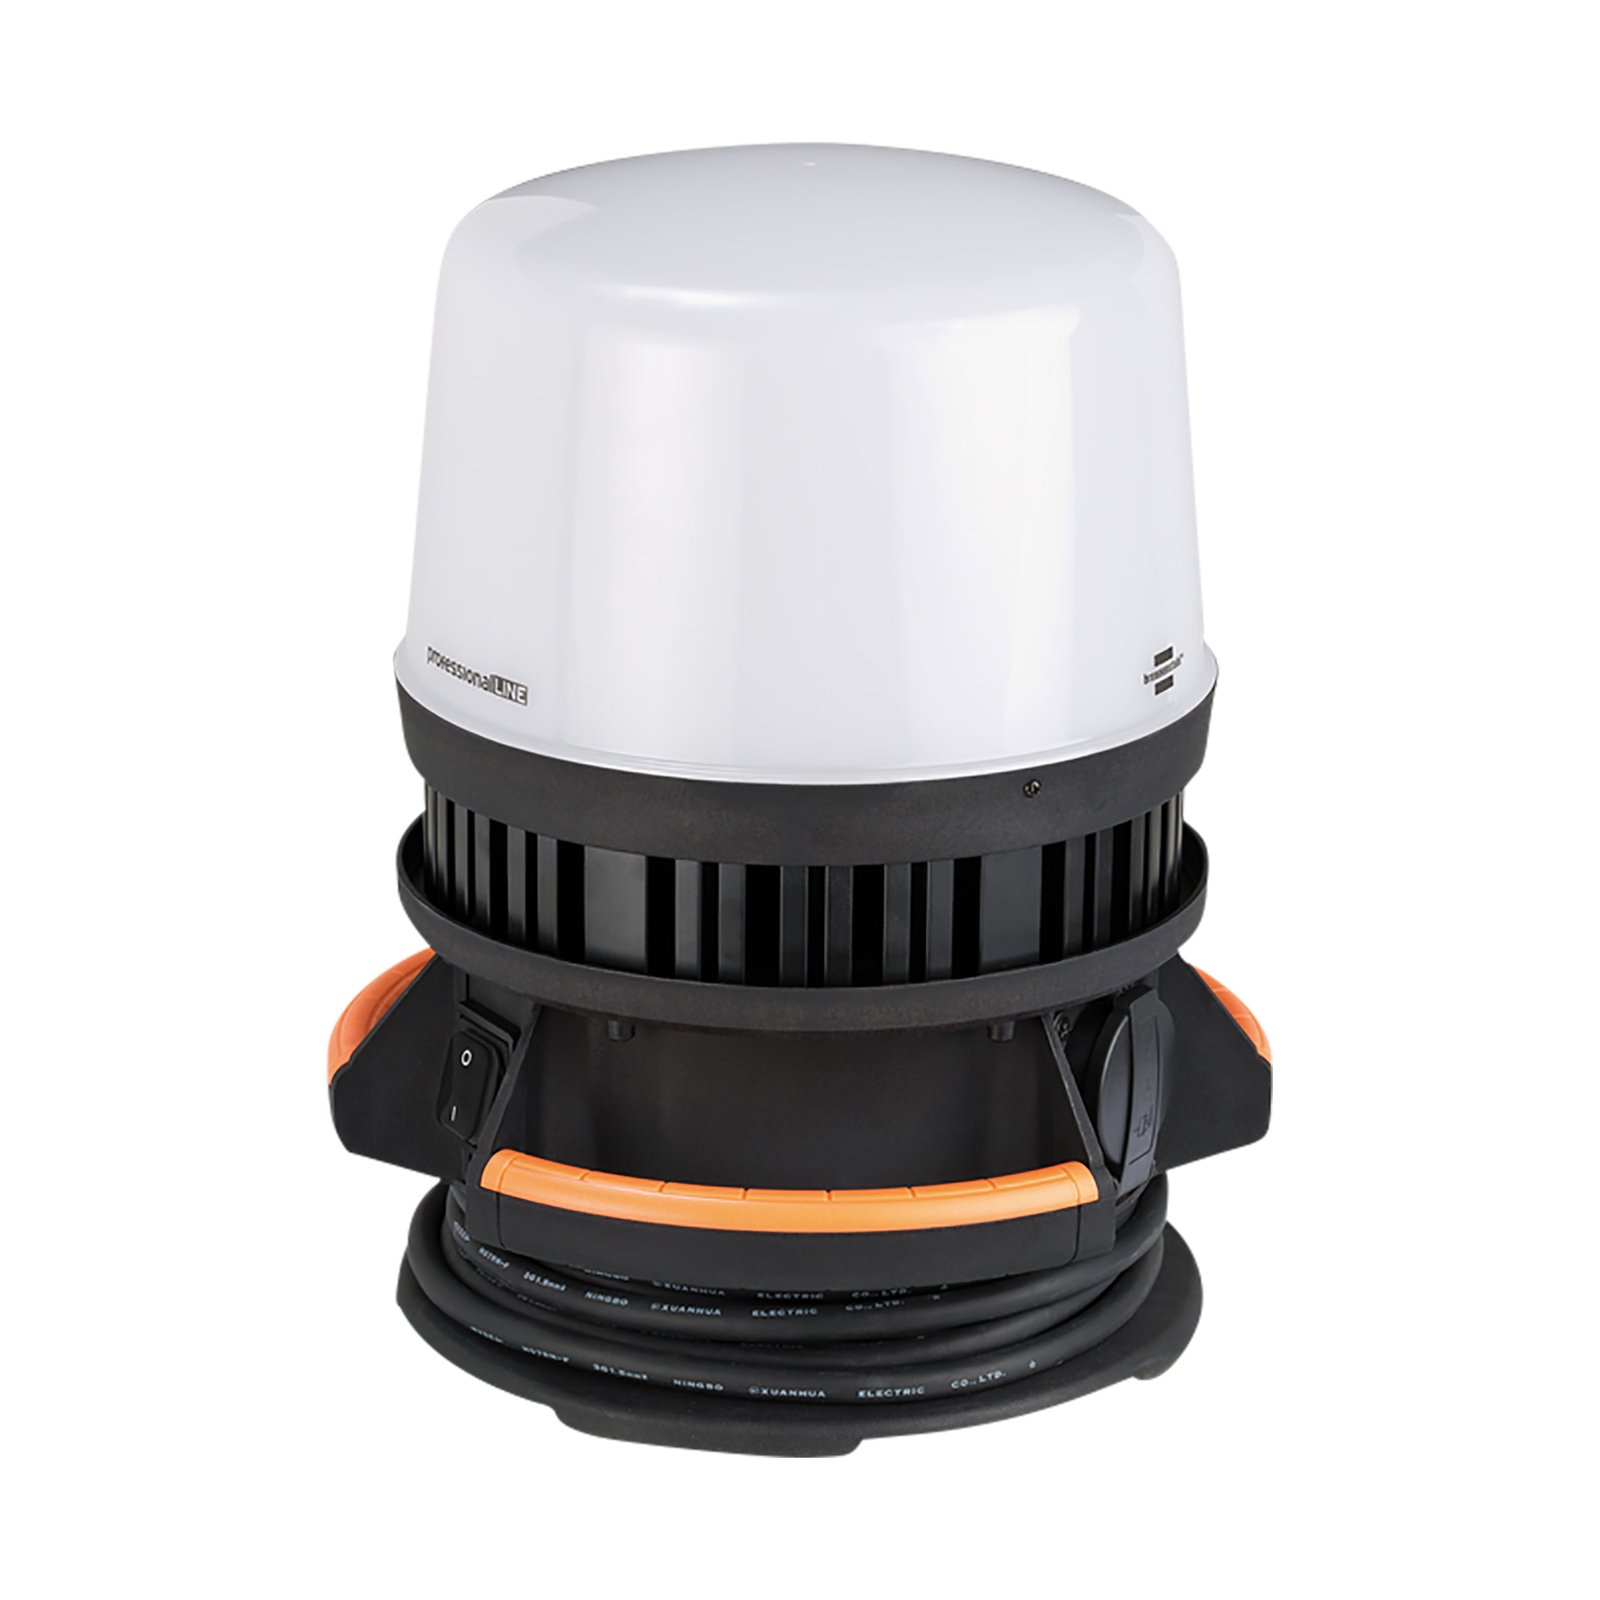 ORUM 12050 M 360° LED reflektor 360° konnektor